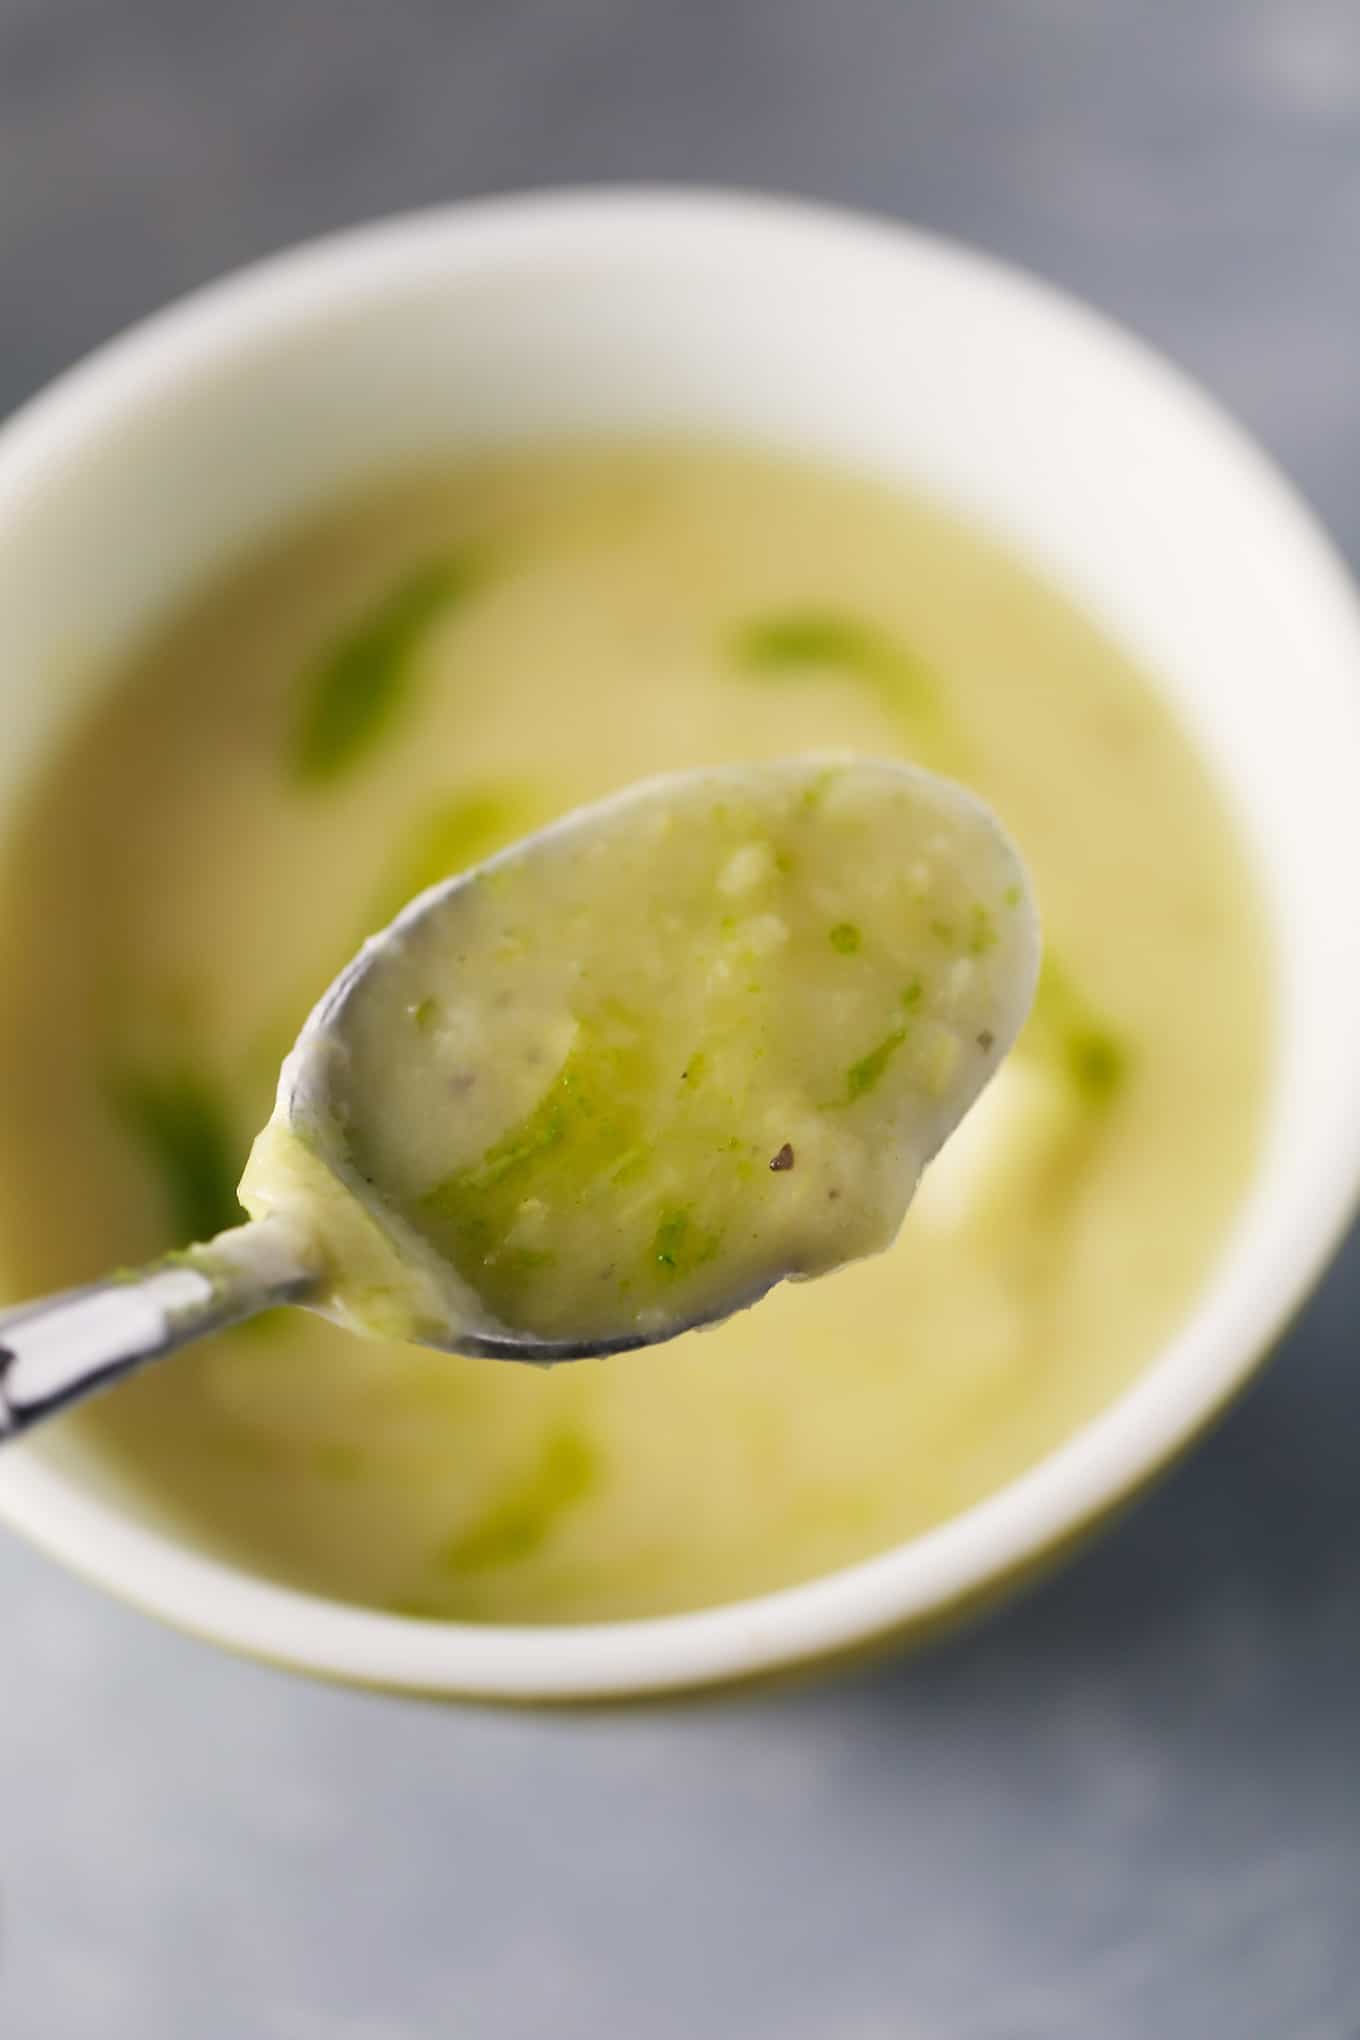 Potato soup with leeks